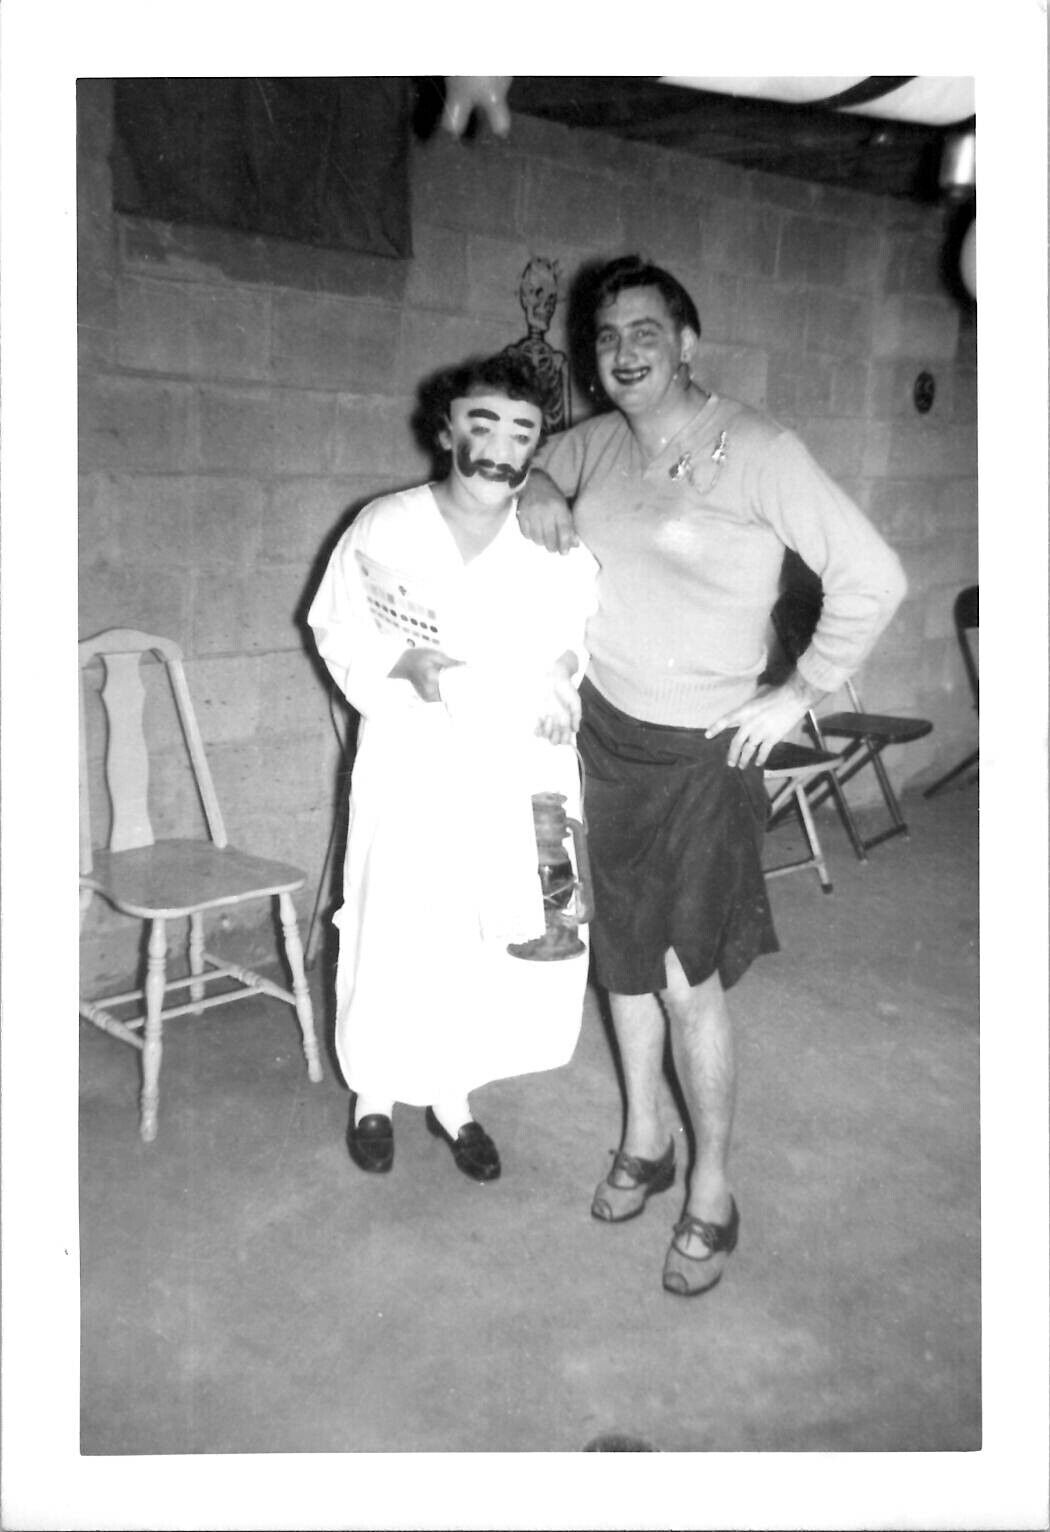 Crossdress Men Dressed as Woman & Geisha Halloween Party 1950s Vintage Gay Photo